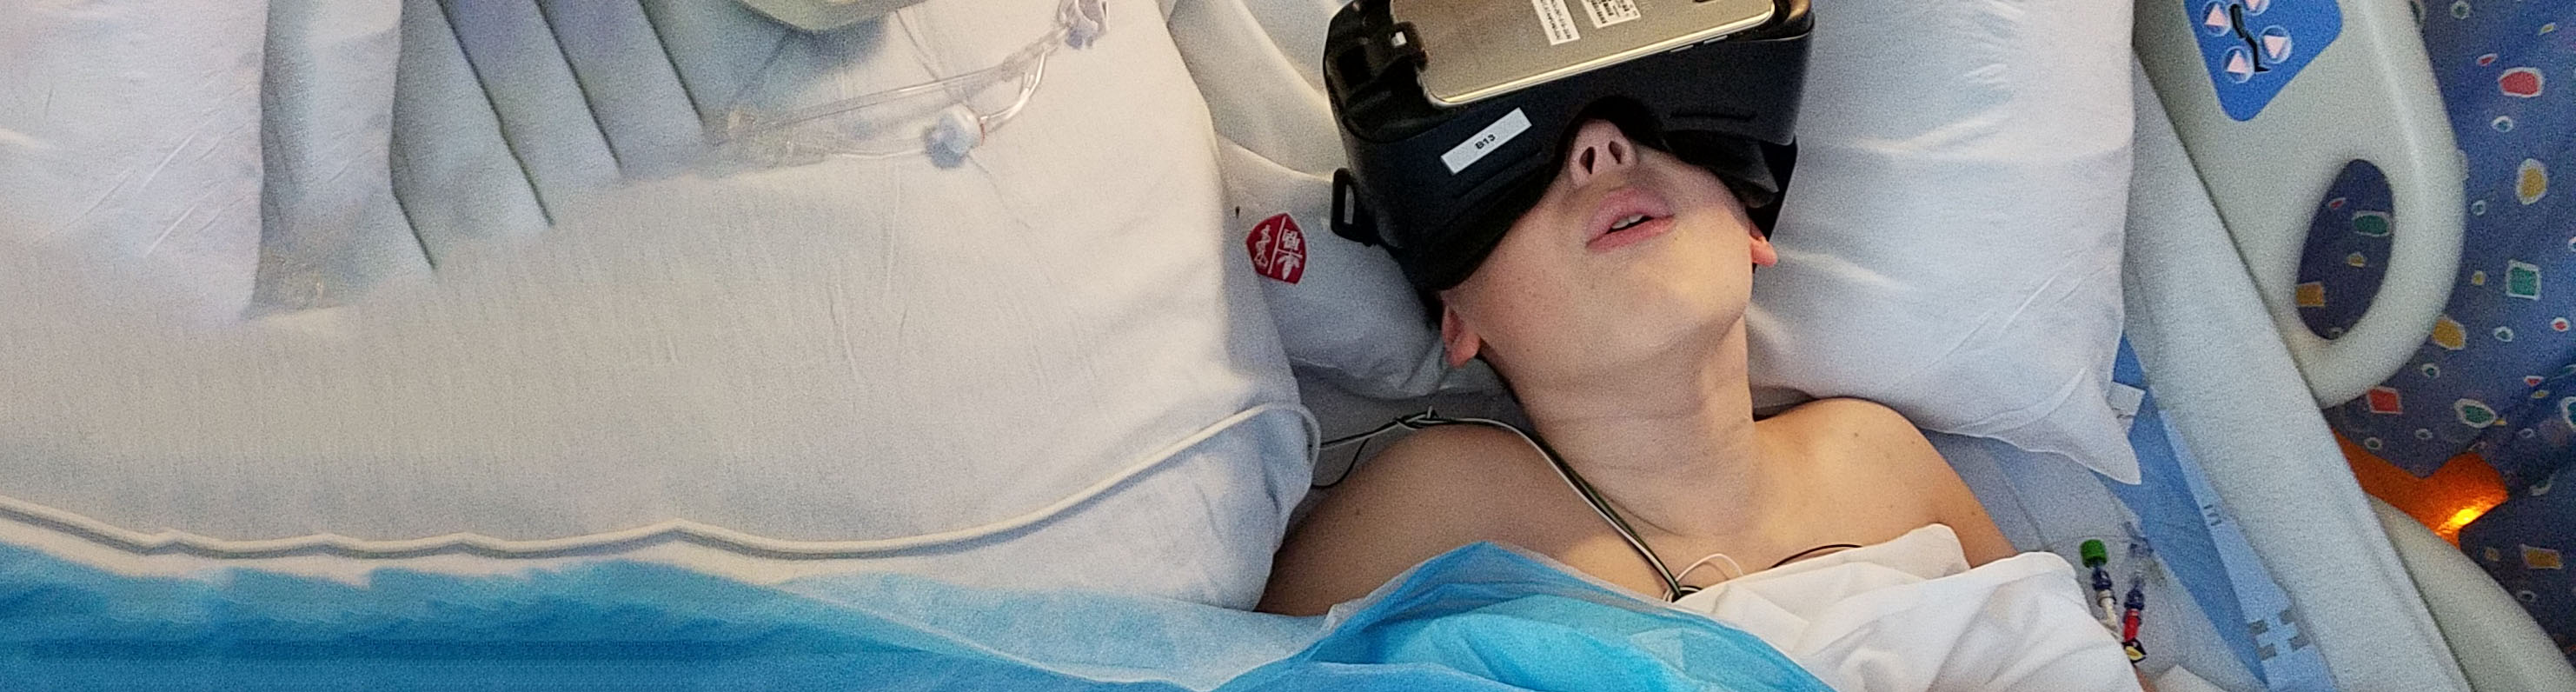 Patient plays VR game